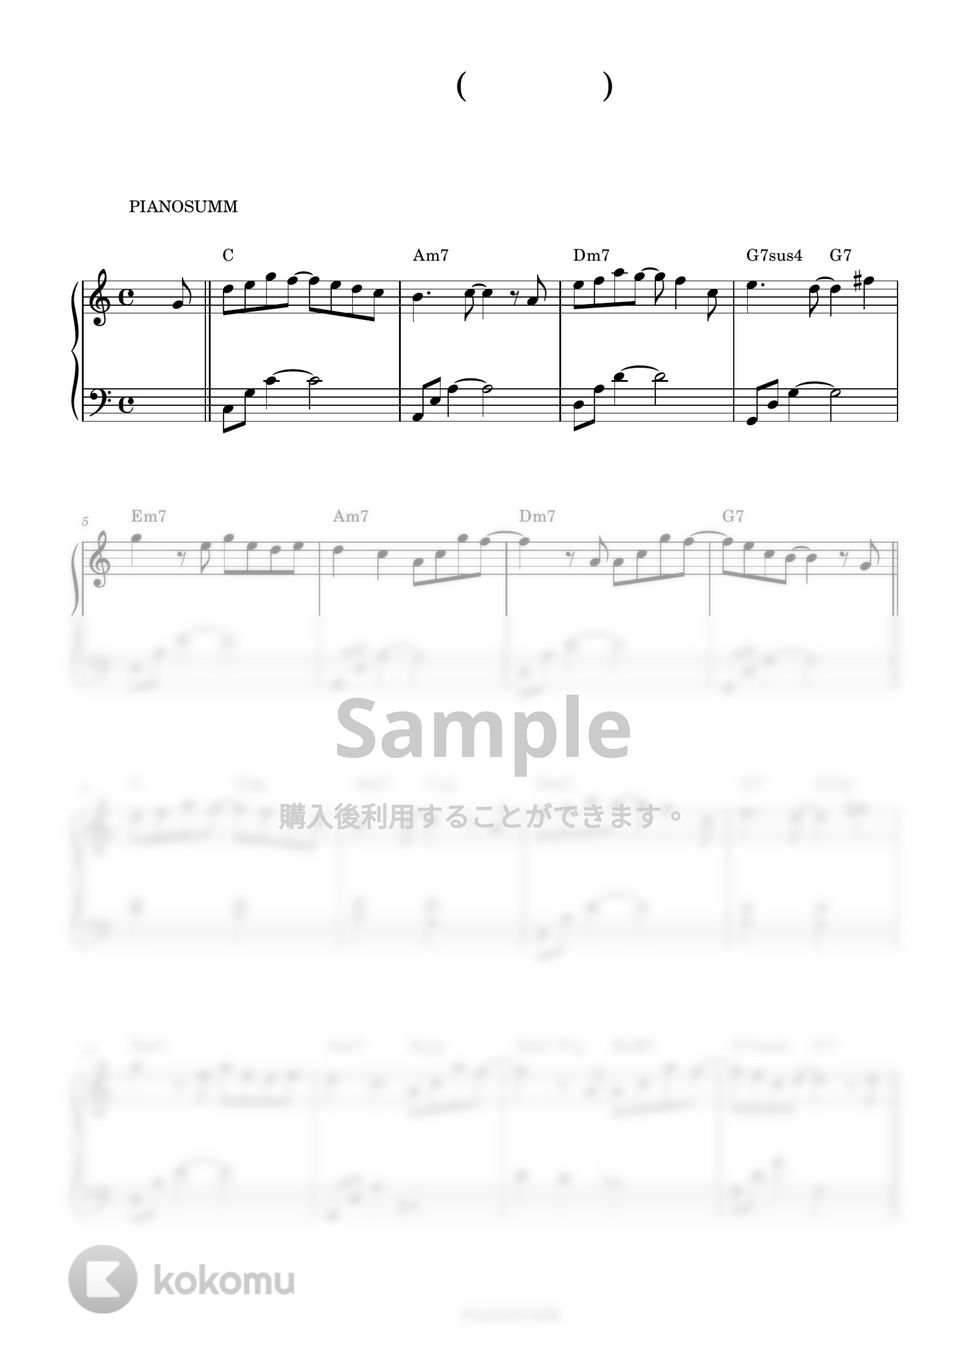 IU(아이유) - Winter Sleep(겨울잠) (Easy ver. Includes Ckey) by PIANOSUMM